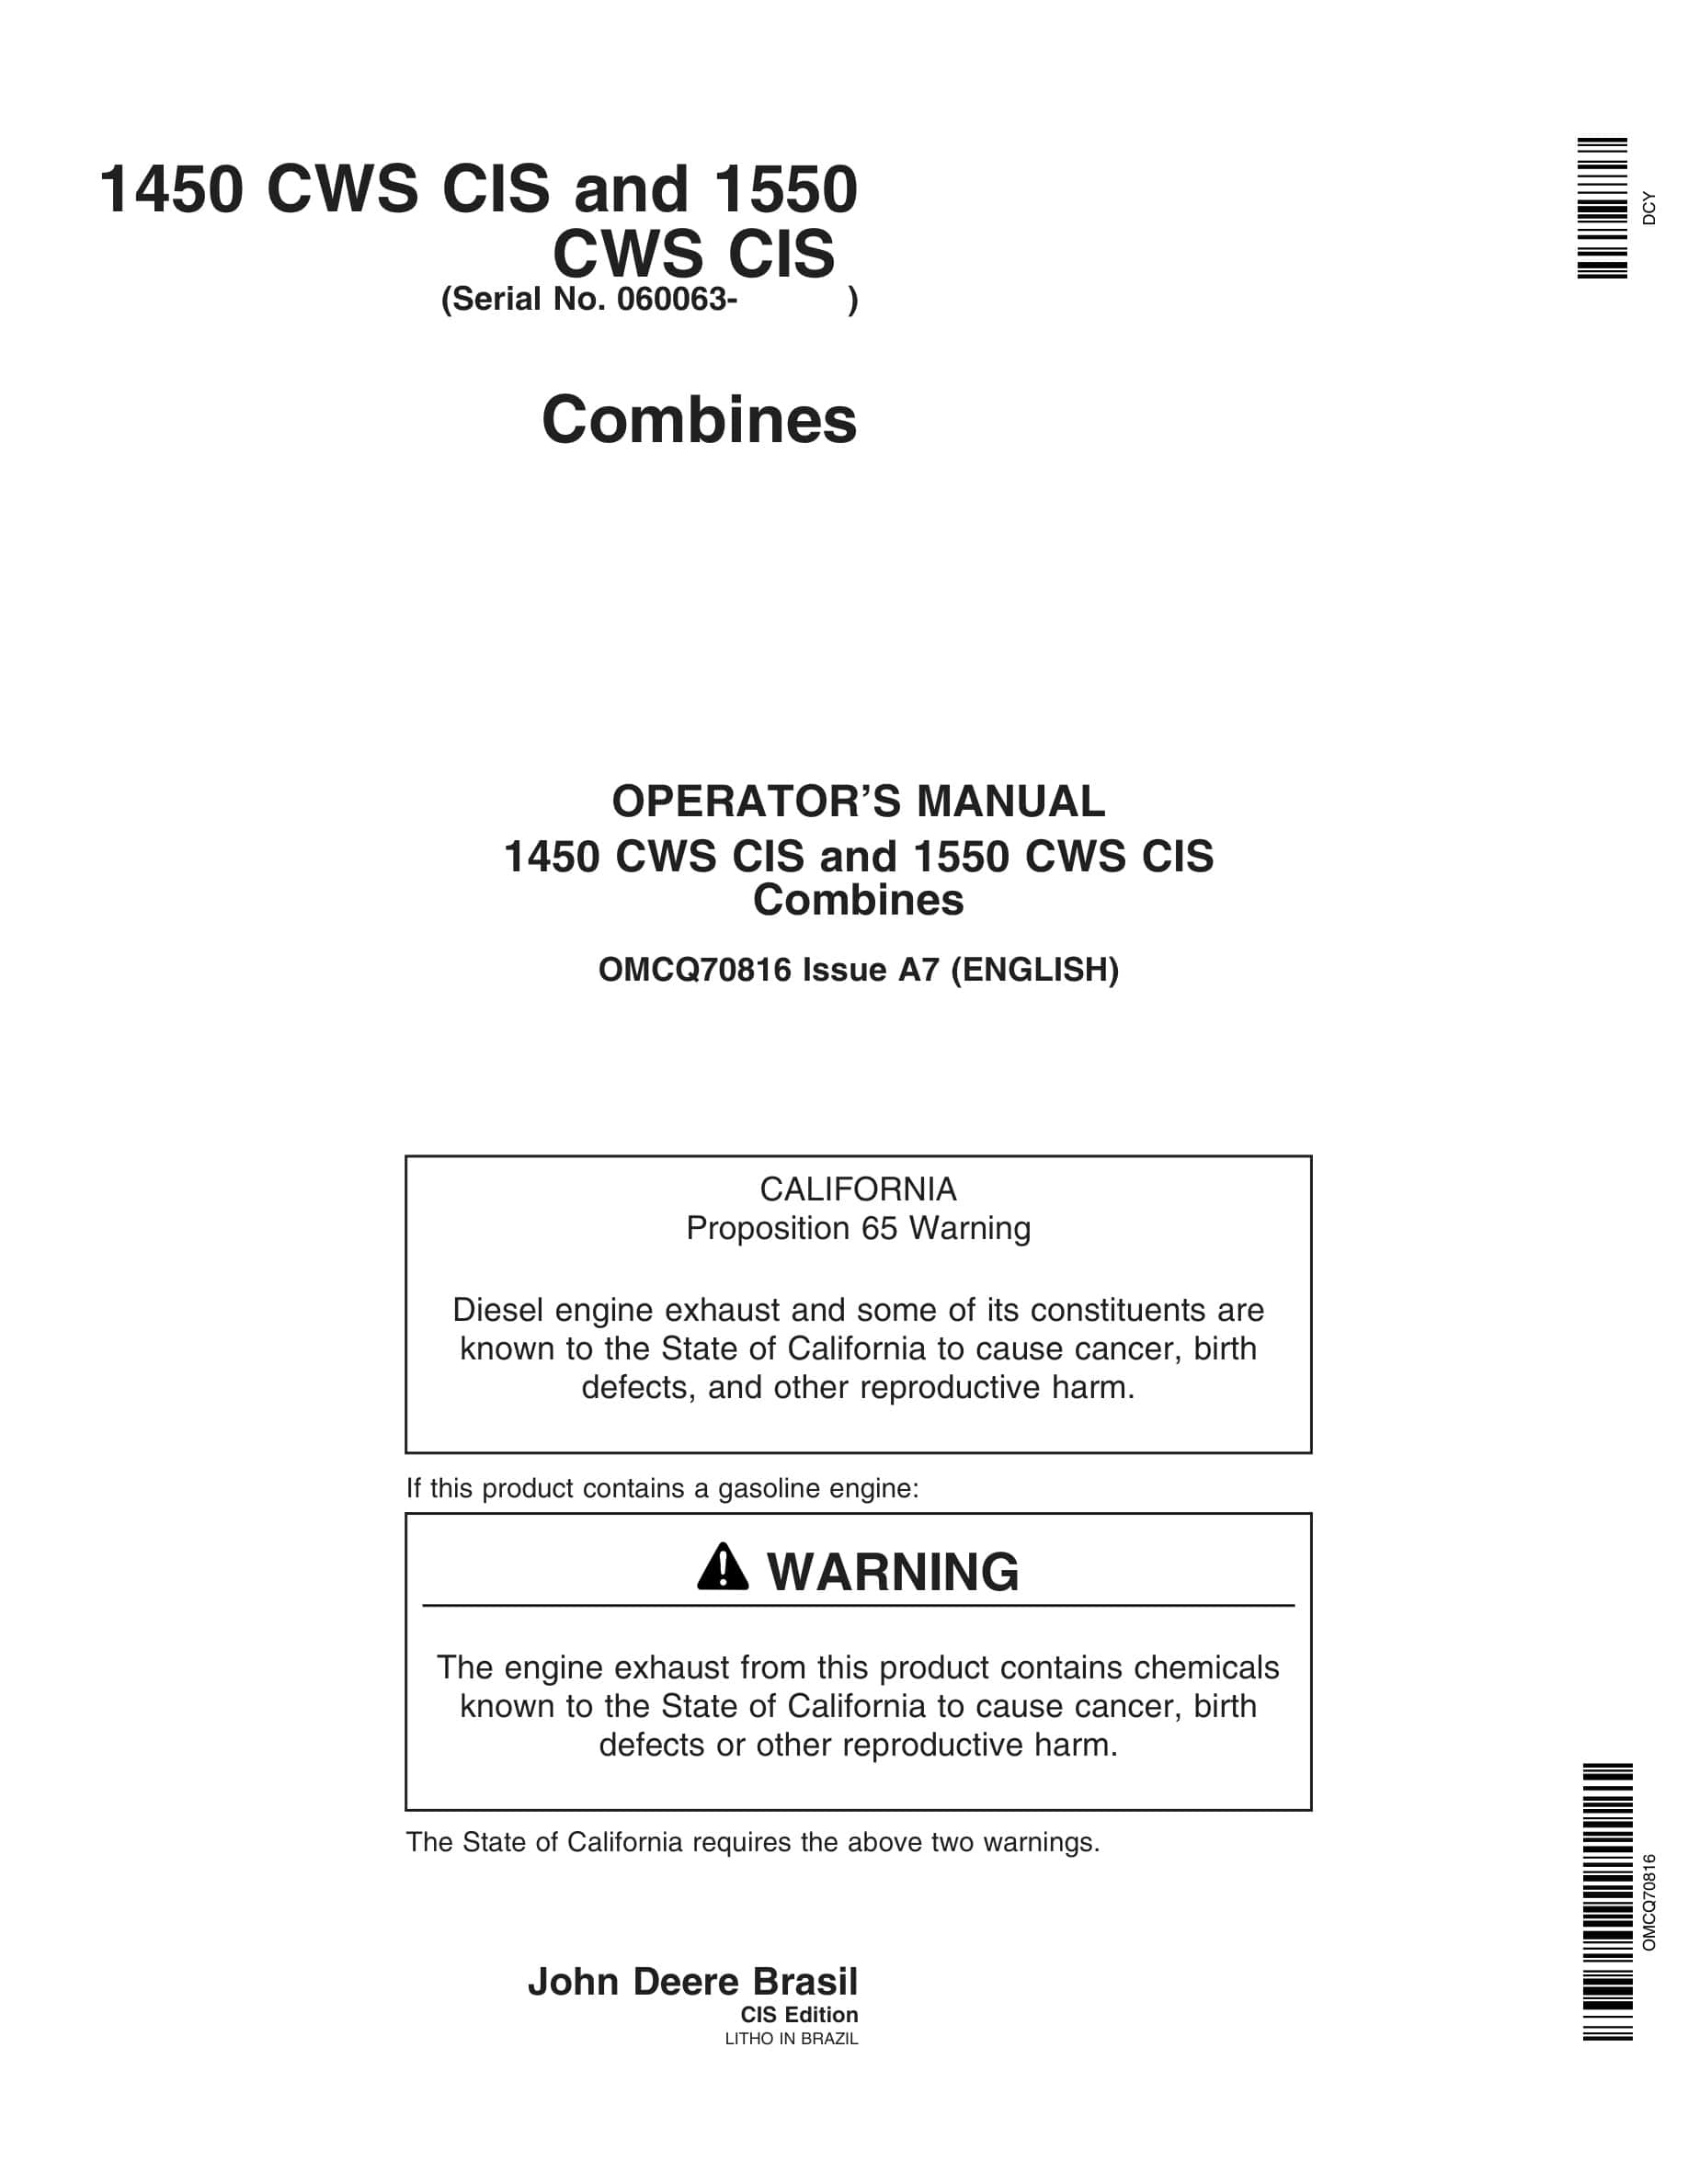 John Deere 1450 CWS CIS and 1550 CWS CIS Combine Operator Manual OMCQ70816-1